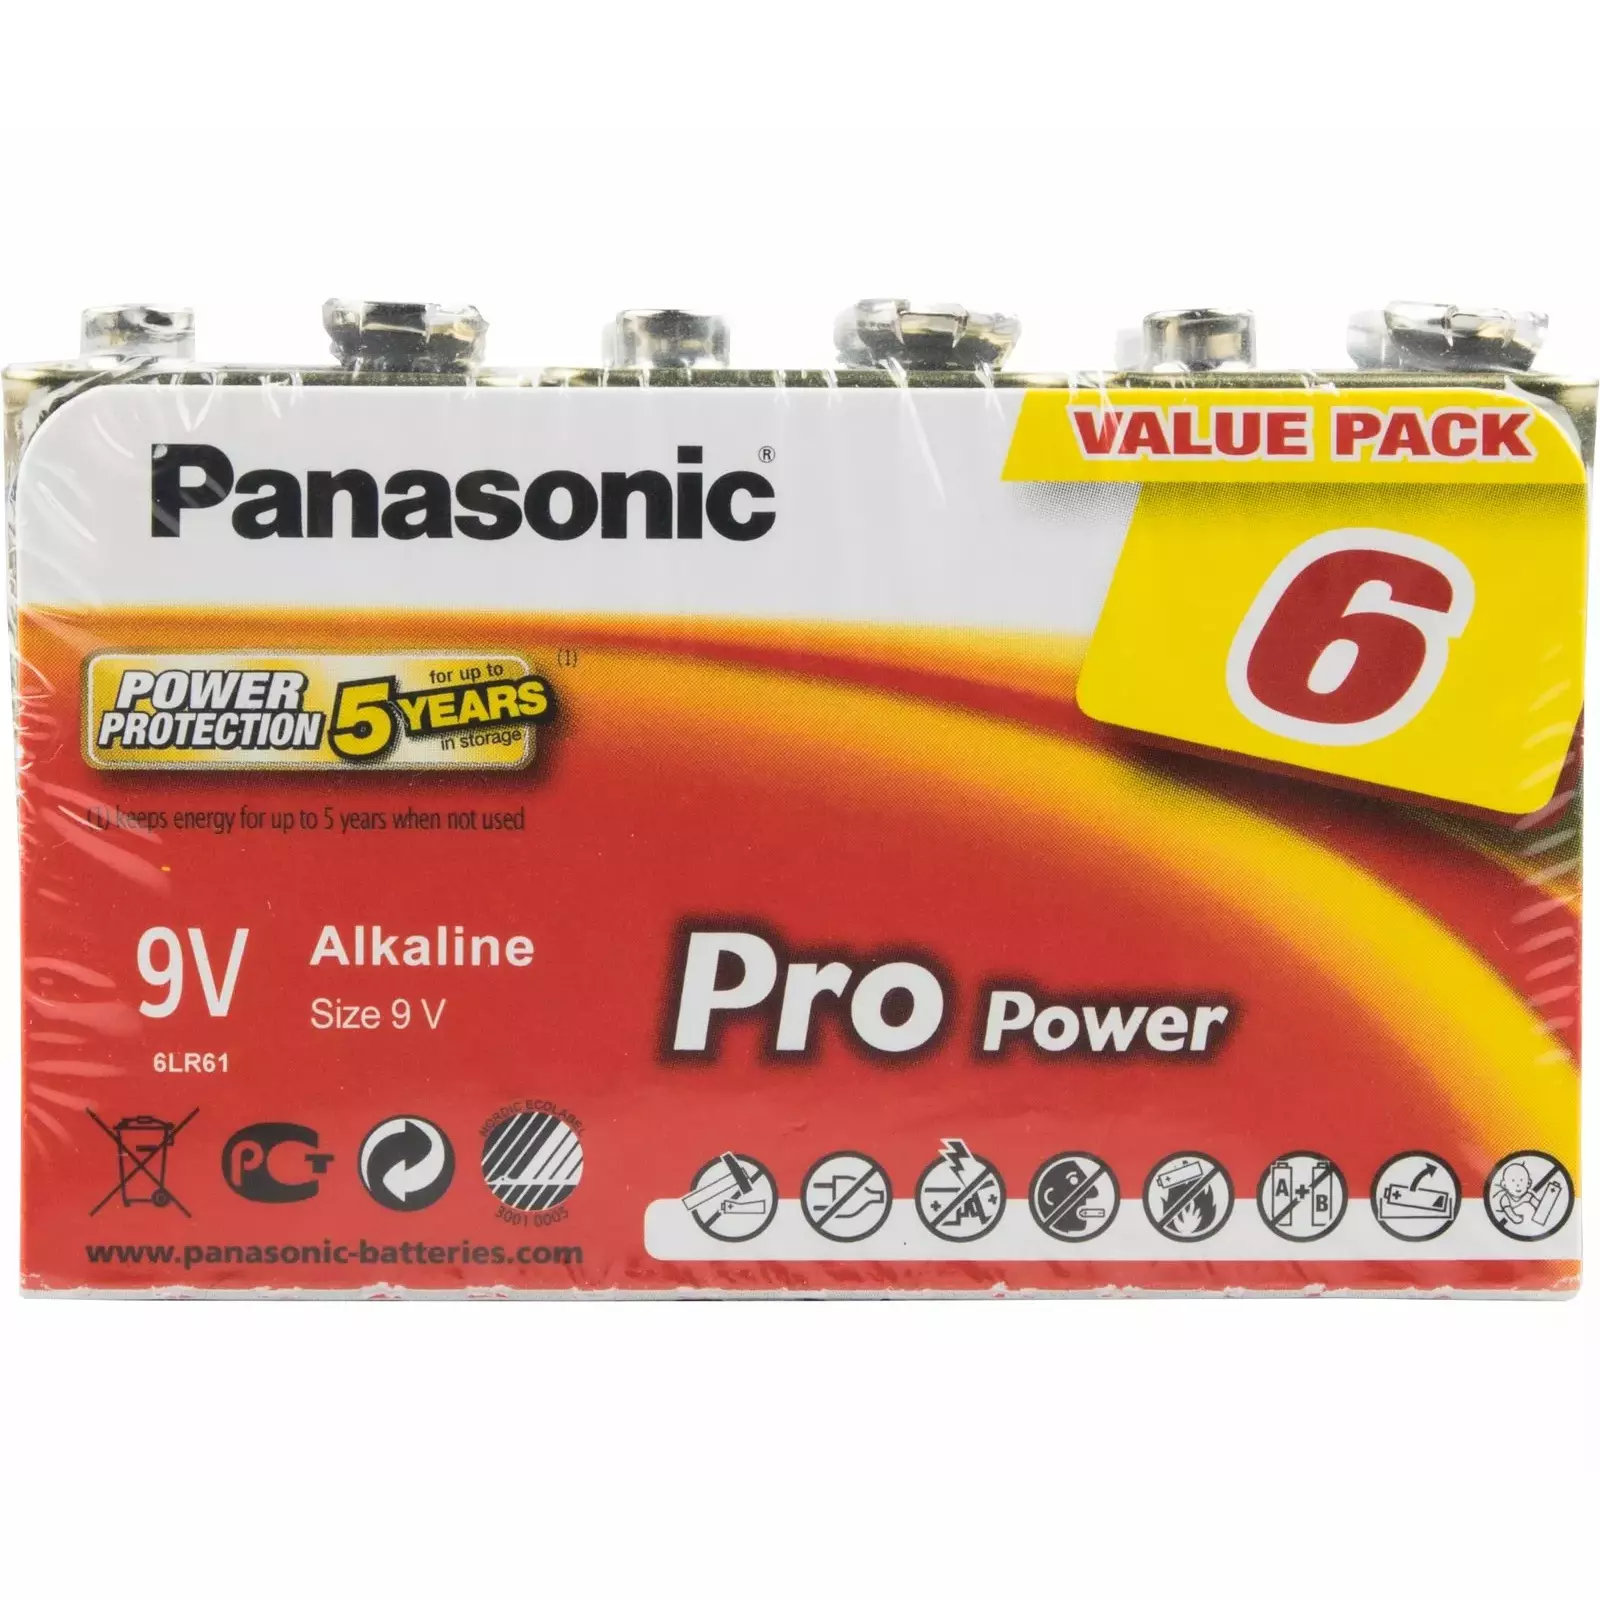 6lr61 батарейка. PROPOWER батарейки. Panasonic Pro Power. Lr61. Повер 6